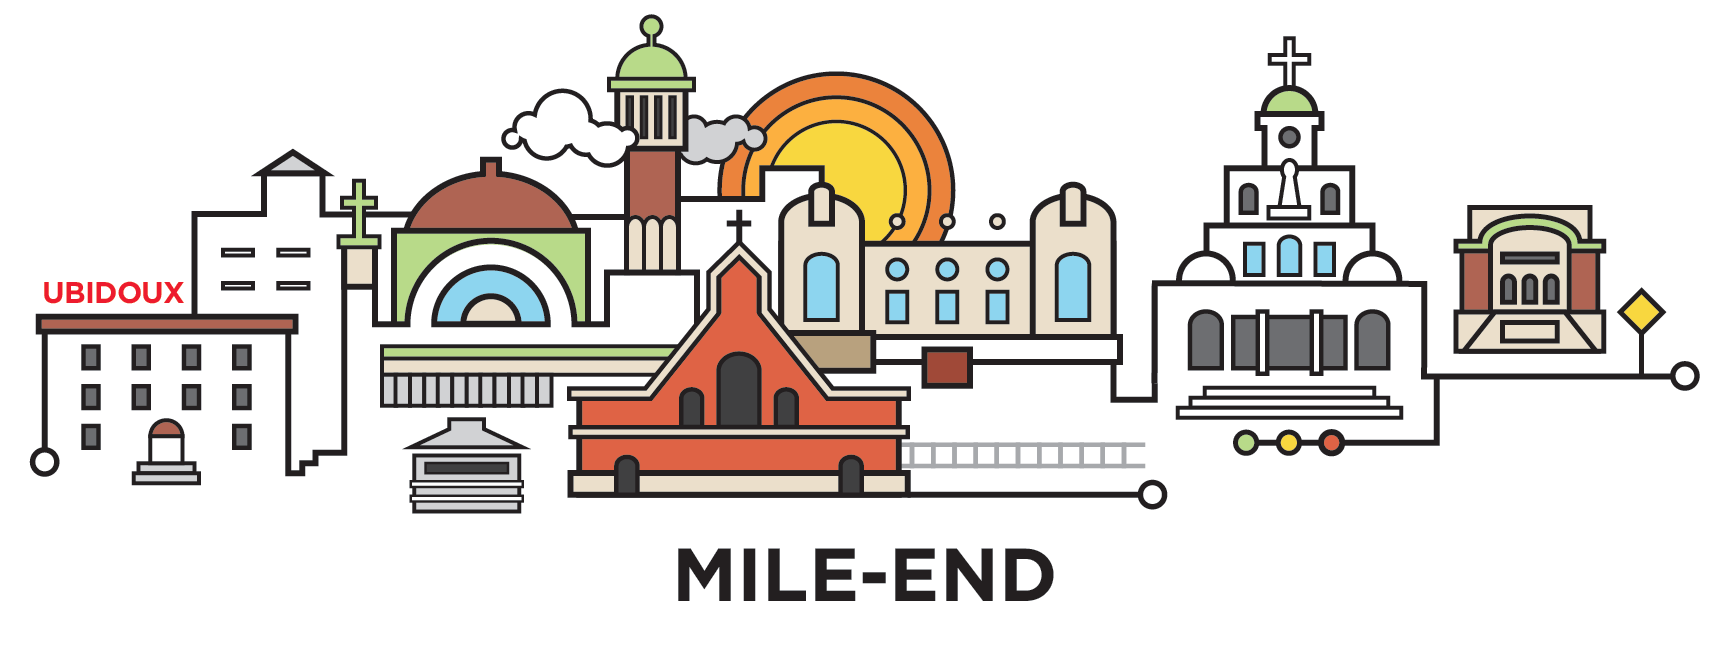 mtl-mile-end-cityline-illustration-by-loogart